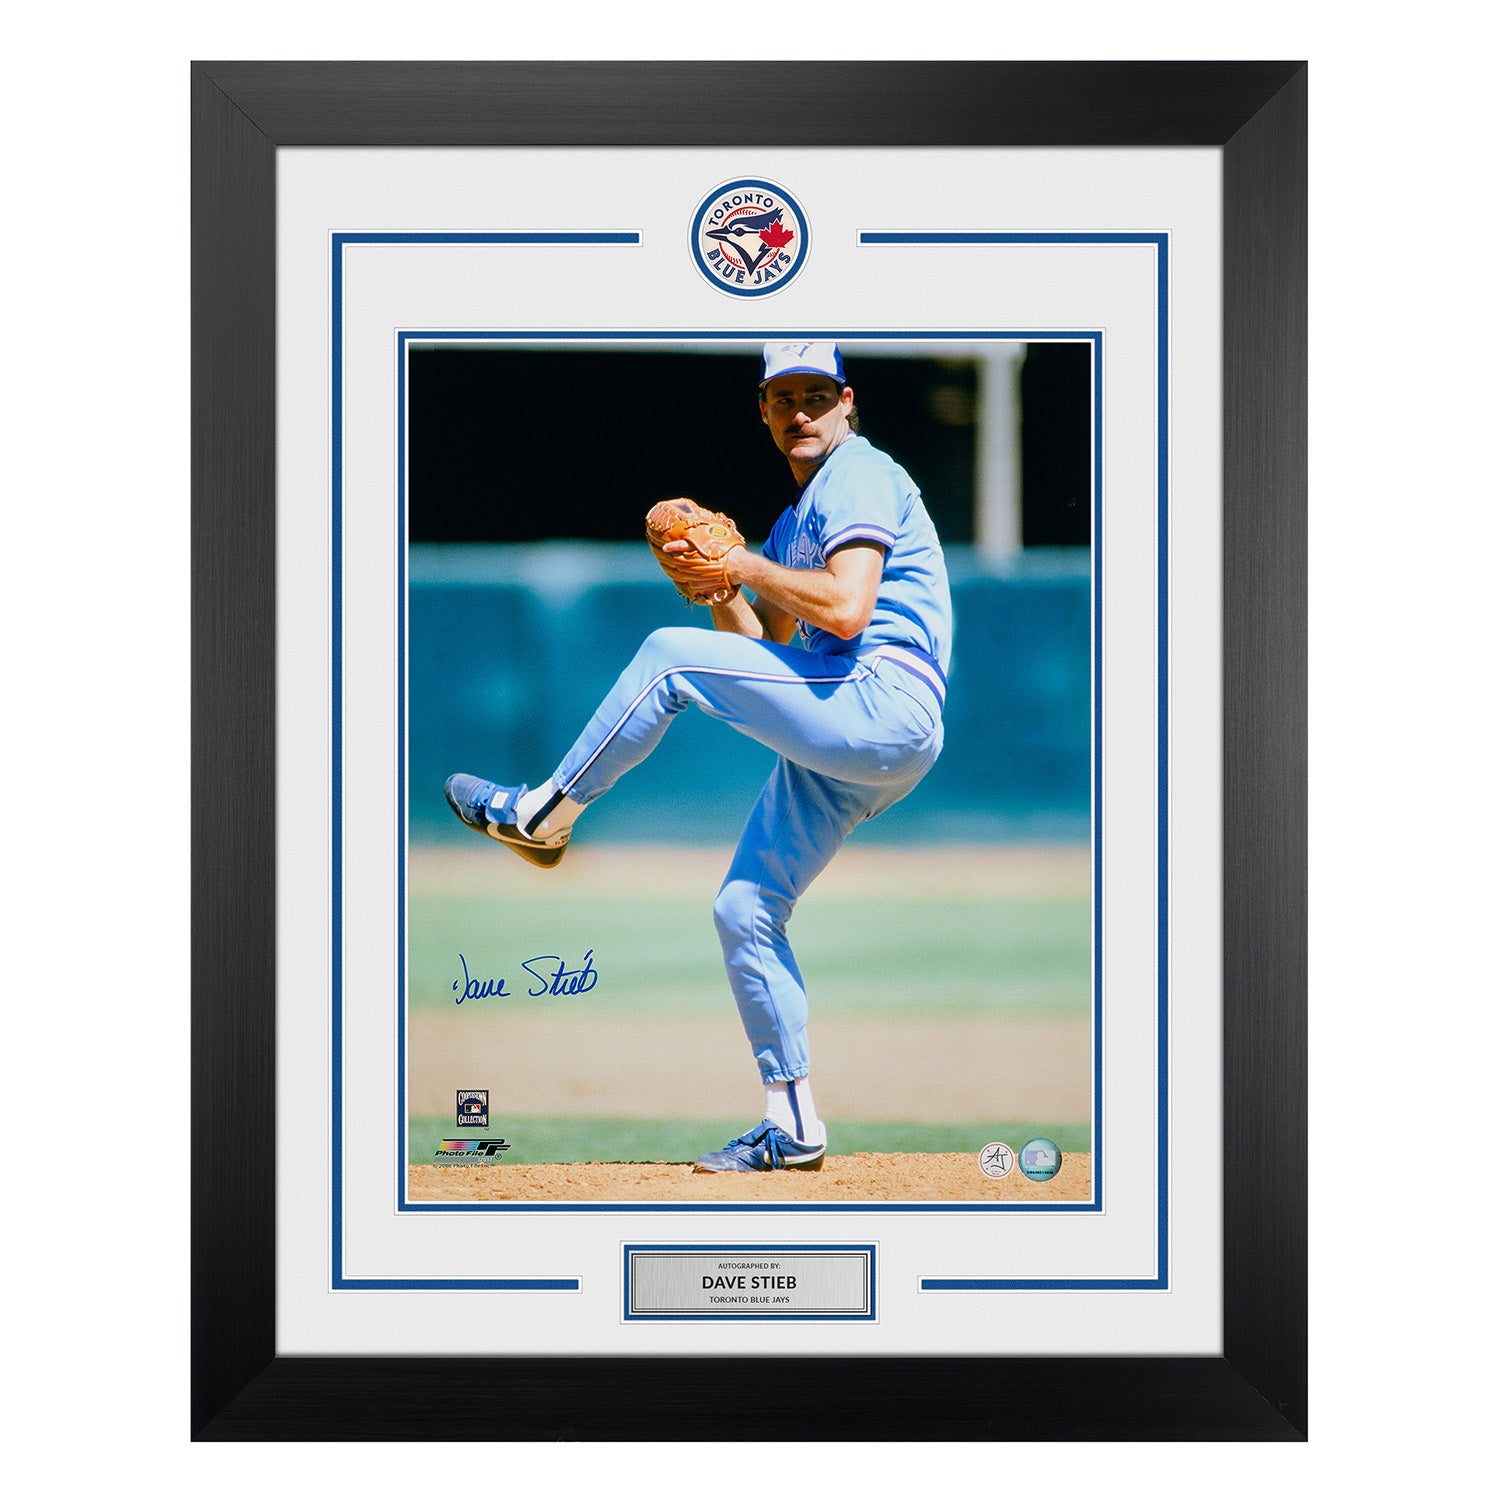 Dave Stieb Autographed Toronto Blue Jays Baseball 26x32 Frame